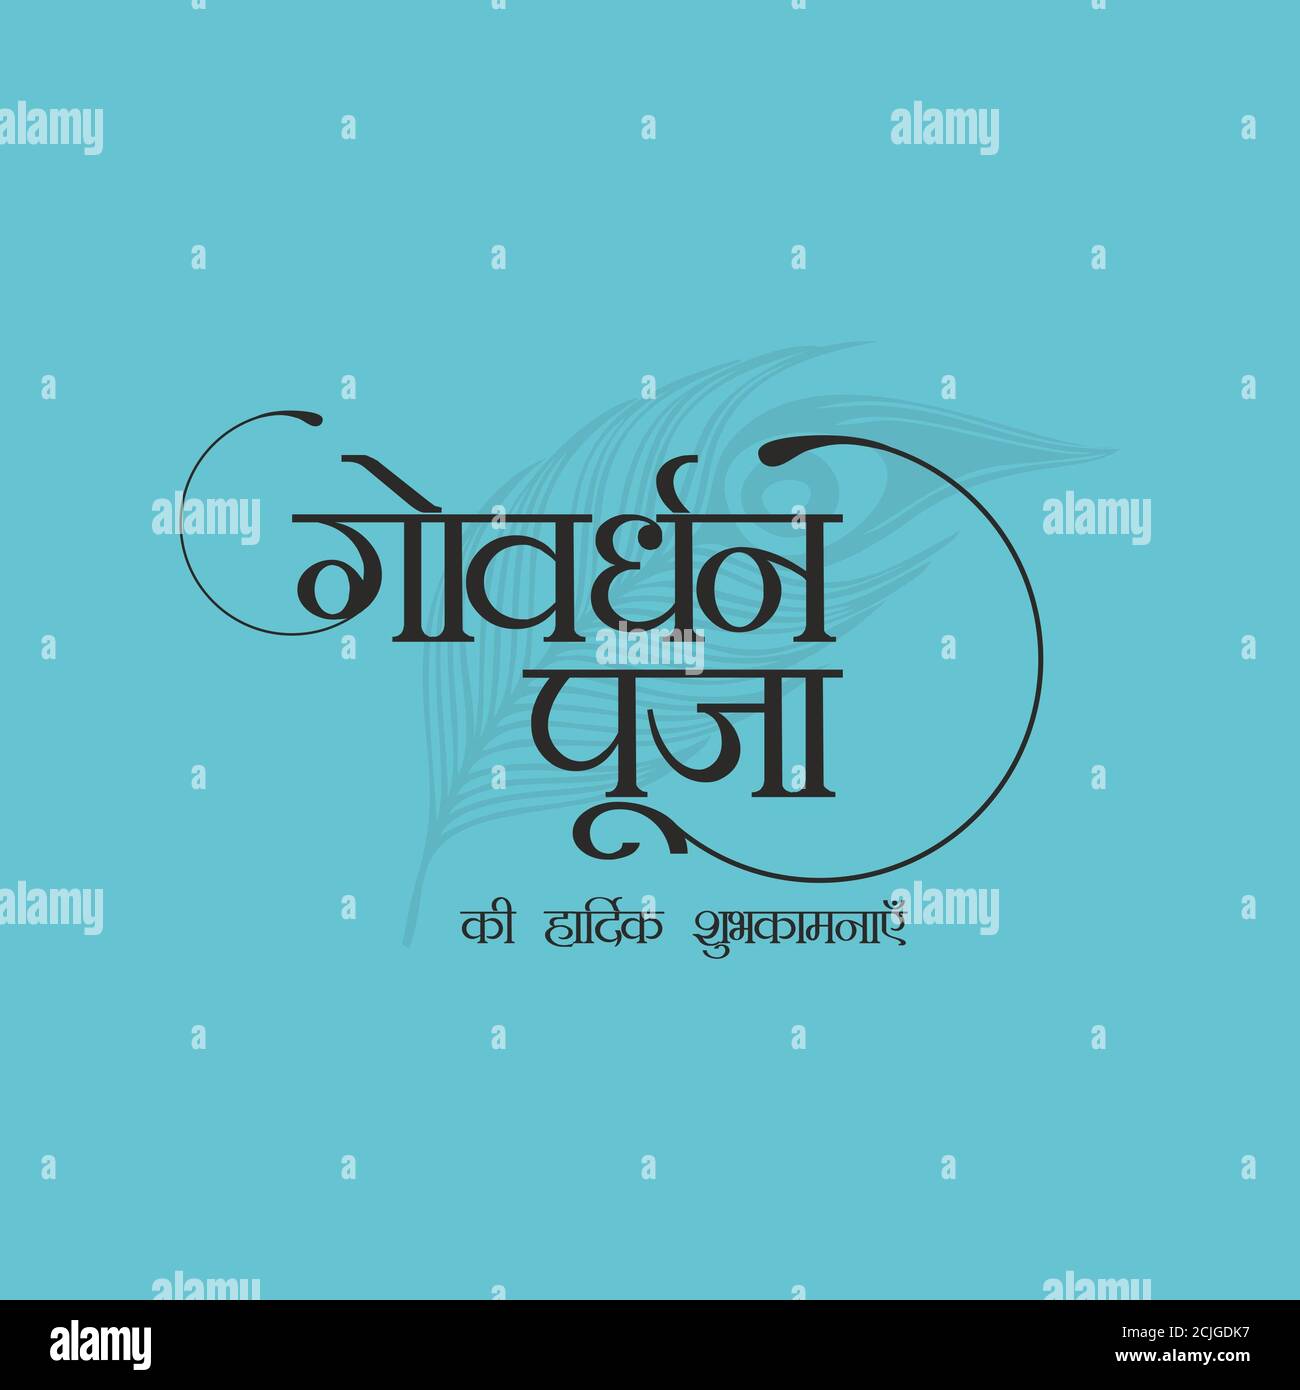 Hindi Typography - Govardhan Puja Ki Hardik Shubhkamnaye - Means Happy Govardhan Worship - Indian Hindu Festival 1 Stock Photo